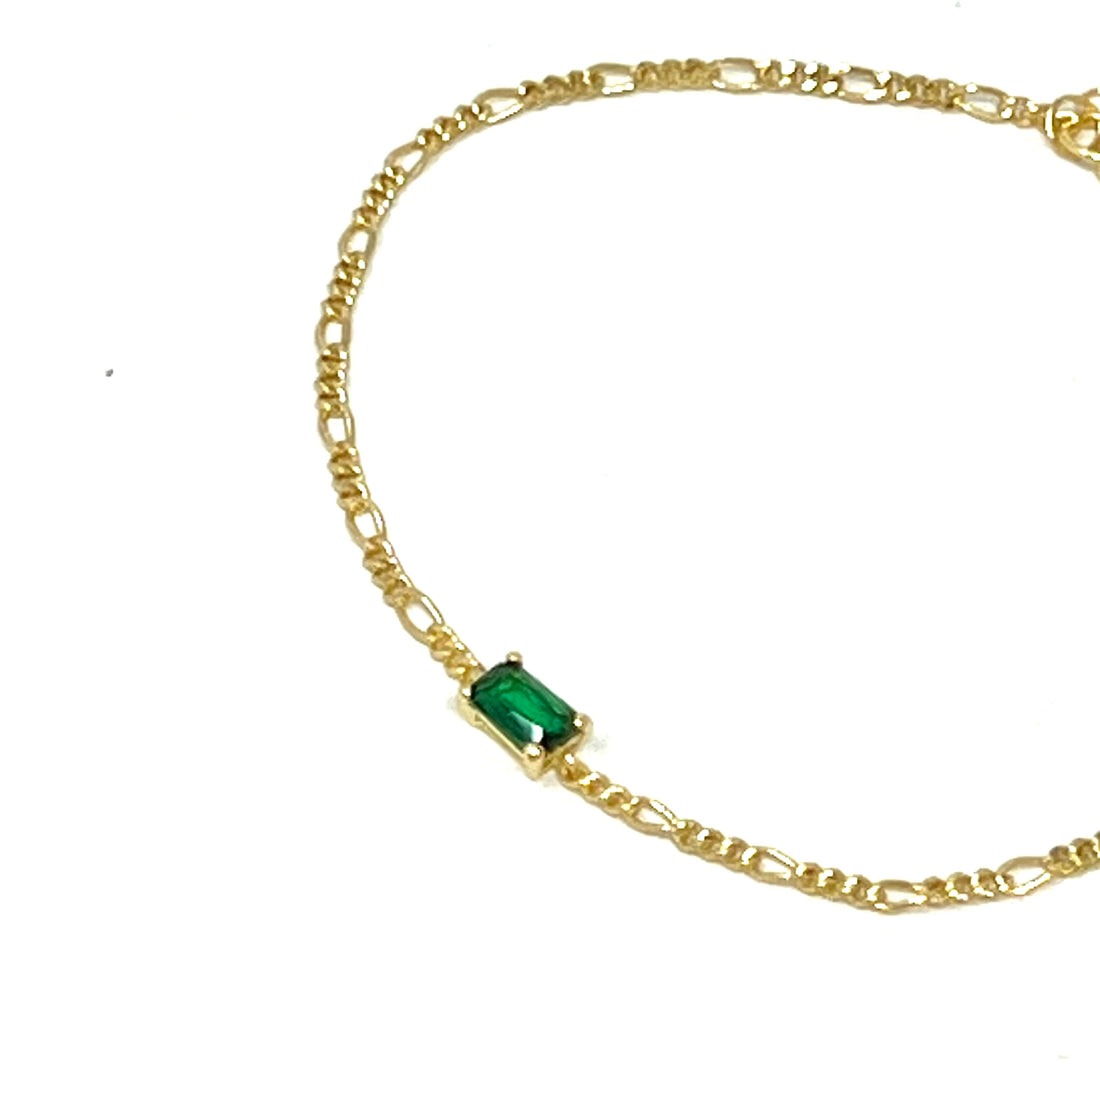 Chloe Delicate Bracelet with Emerald Green Stone